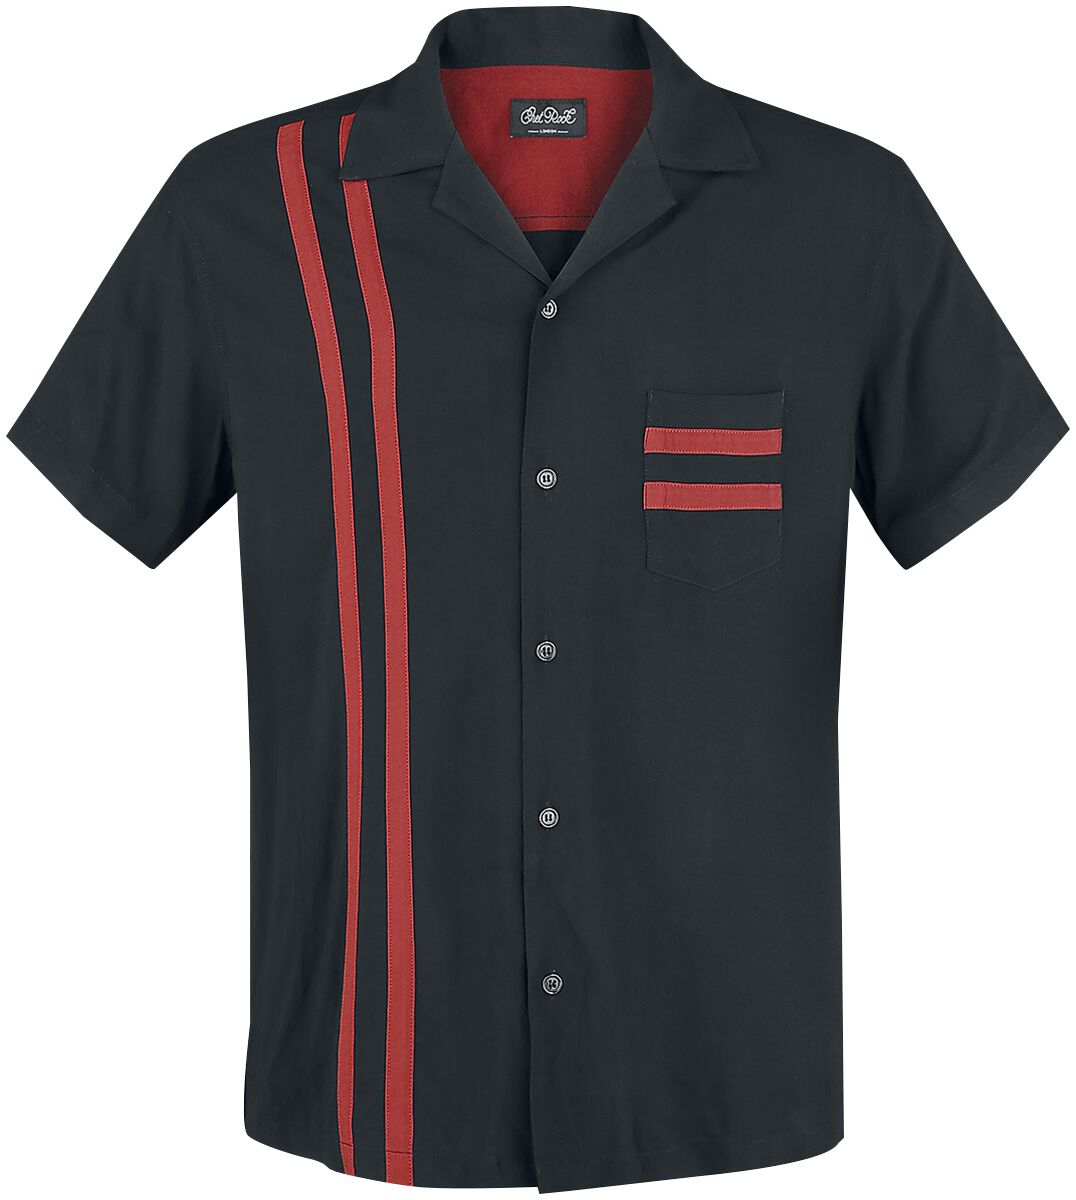 Chet Rock Lucky Stripe Bowling Shirt Short-sleeved Shirt black red